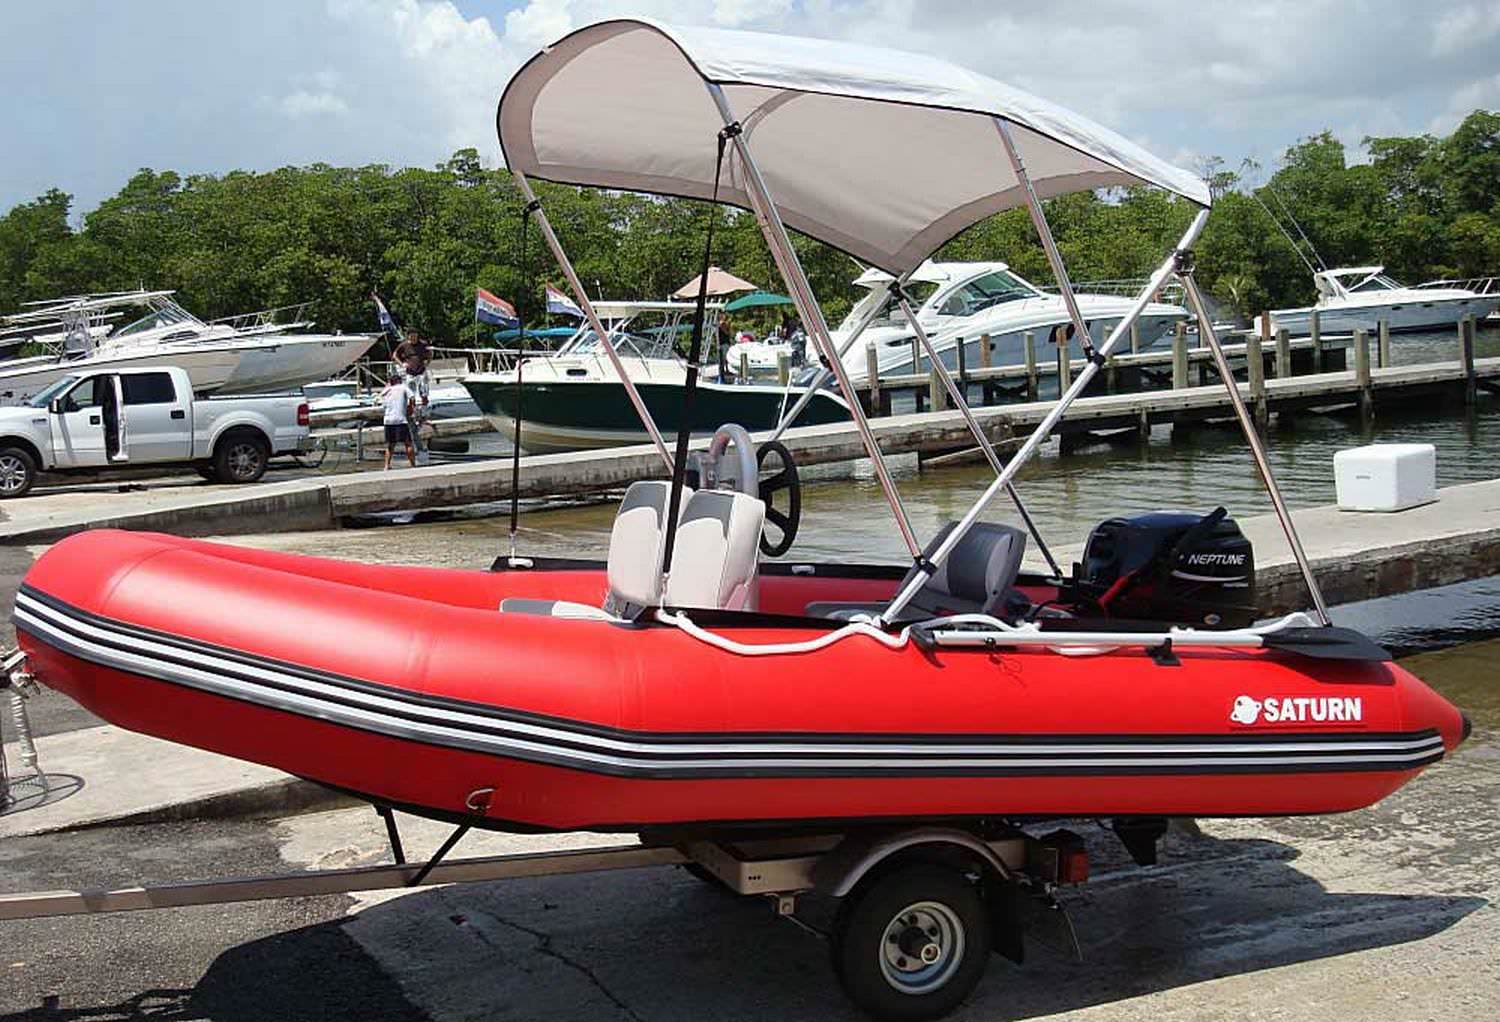 Folding T-Top  Folding boat, Boat accessories diy, Boat accessories